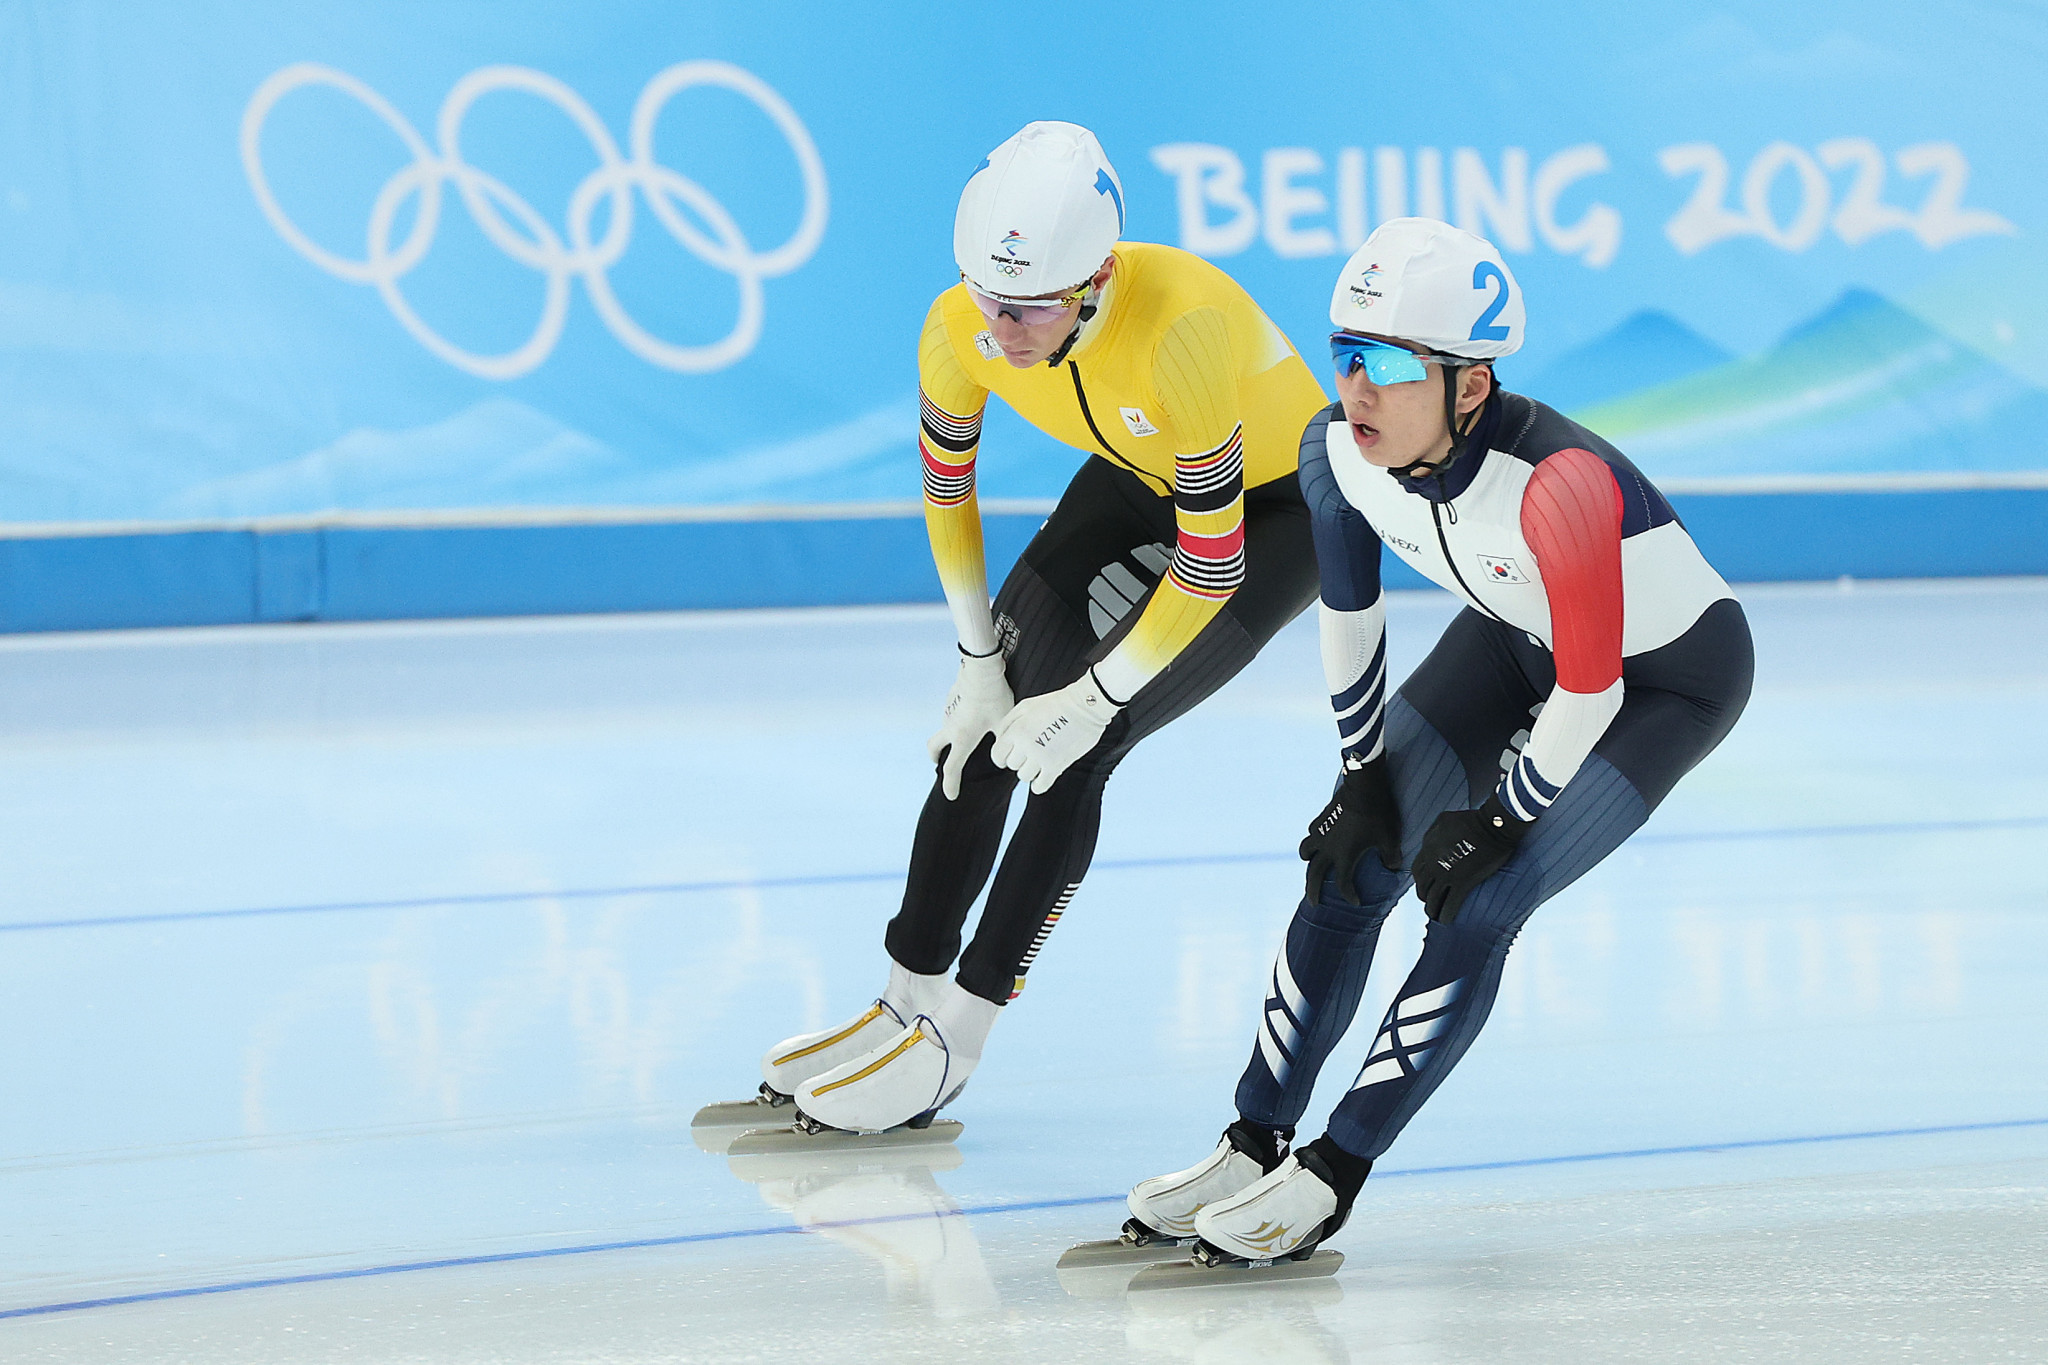 Chung Jae-won, right, won medals at Beijing 2022 and Pyeongchang 2018  ©Getty Images